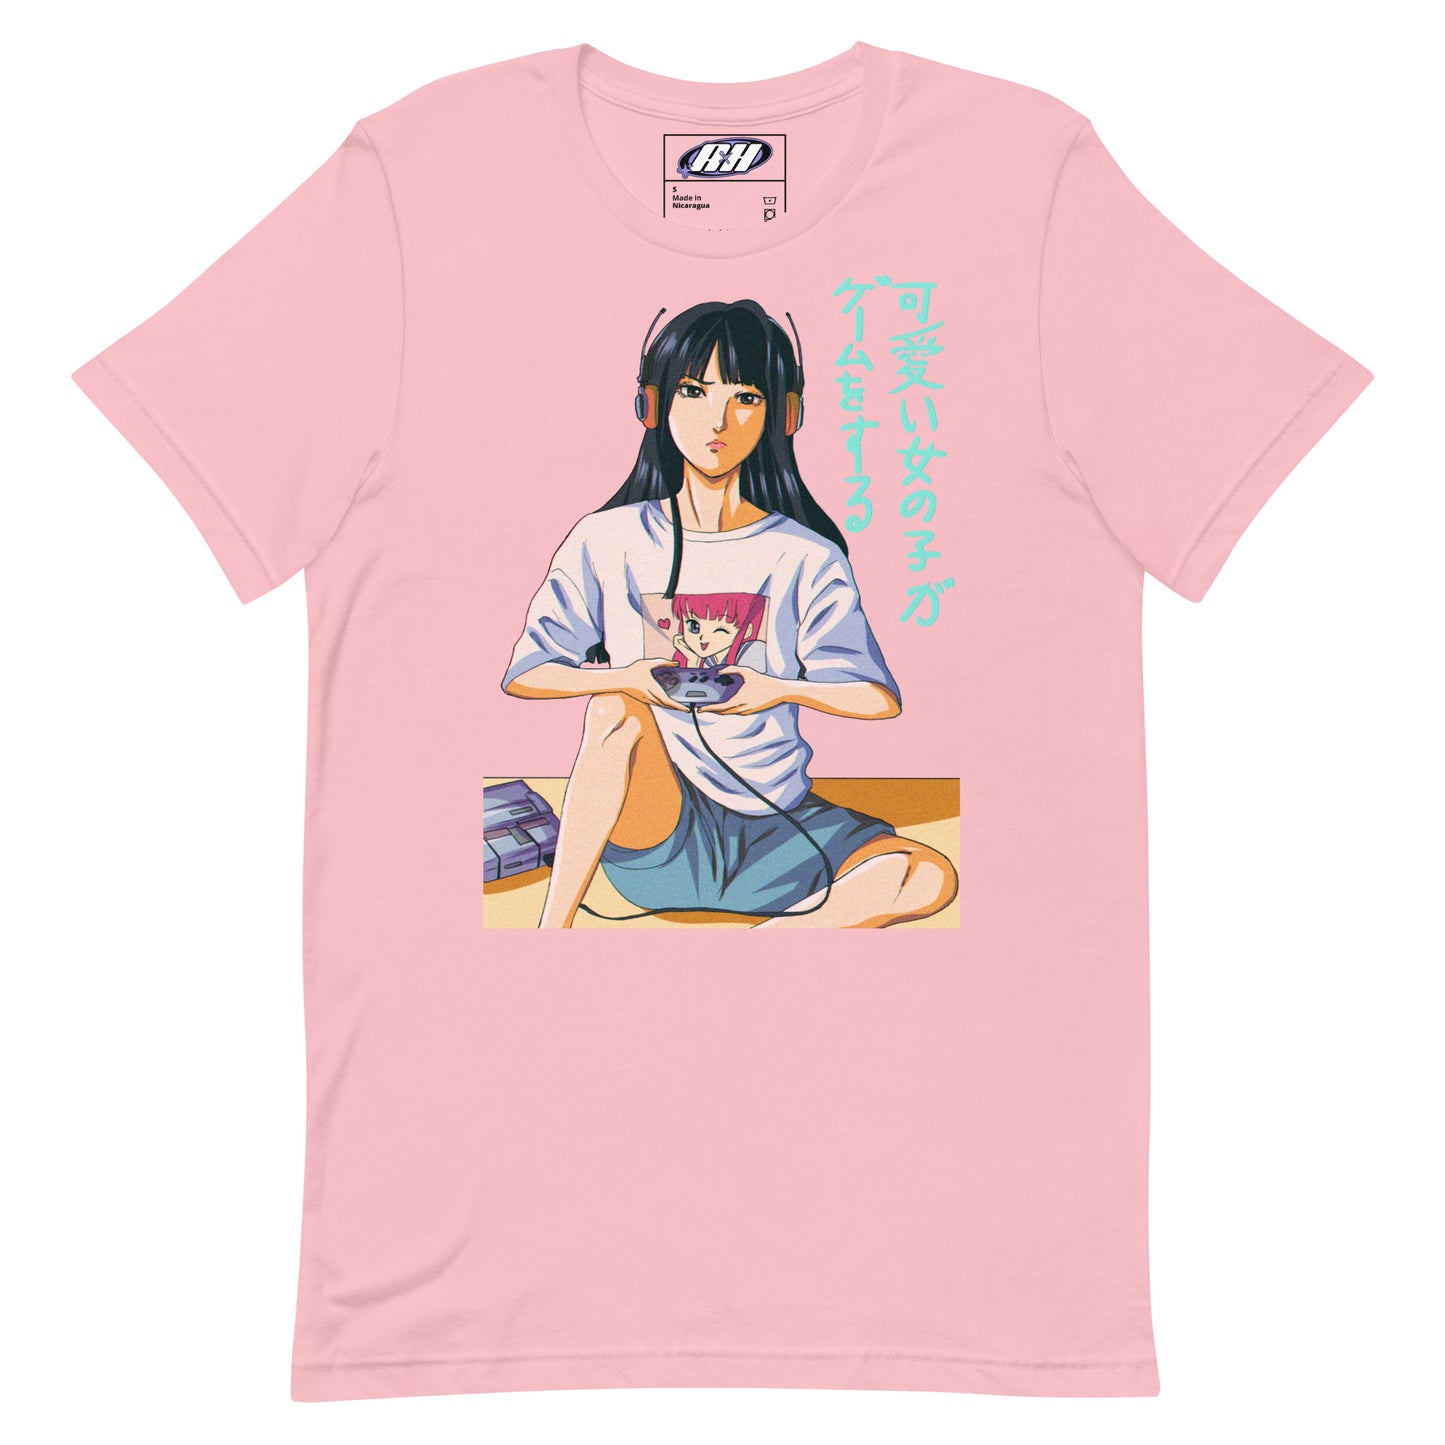 Pretty Girls Play Games T-Shirt - anime&hiphop